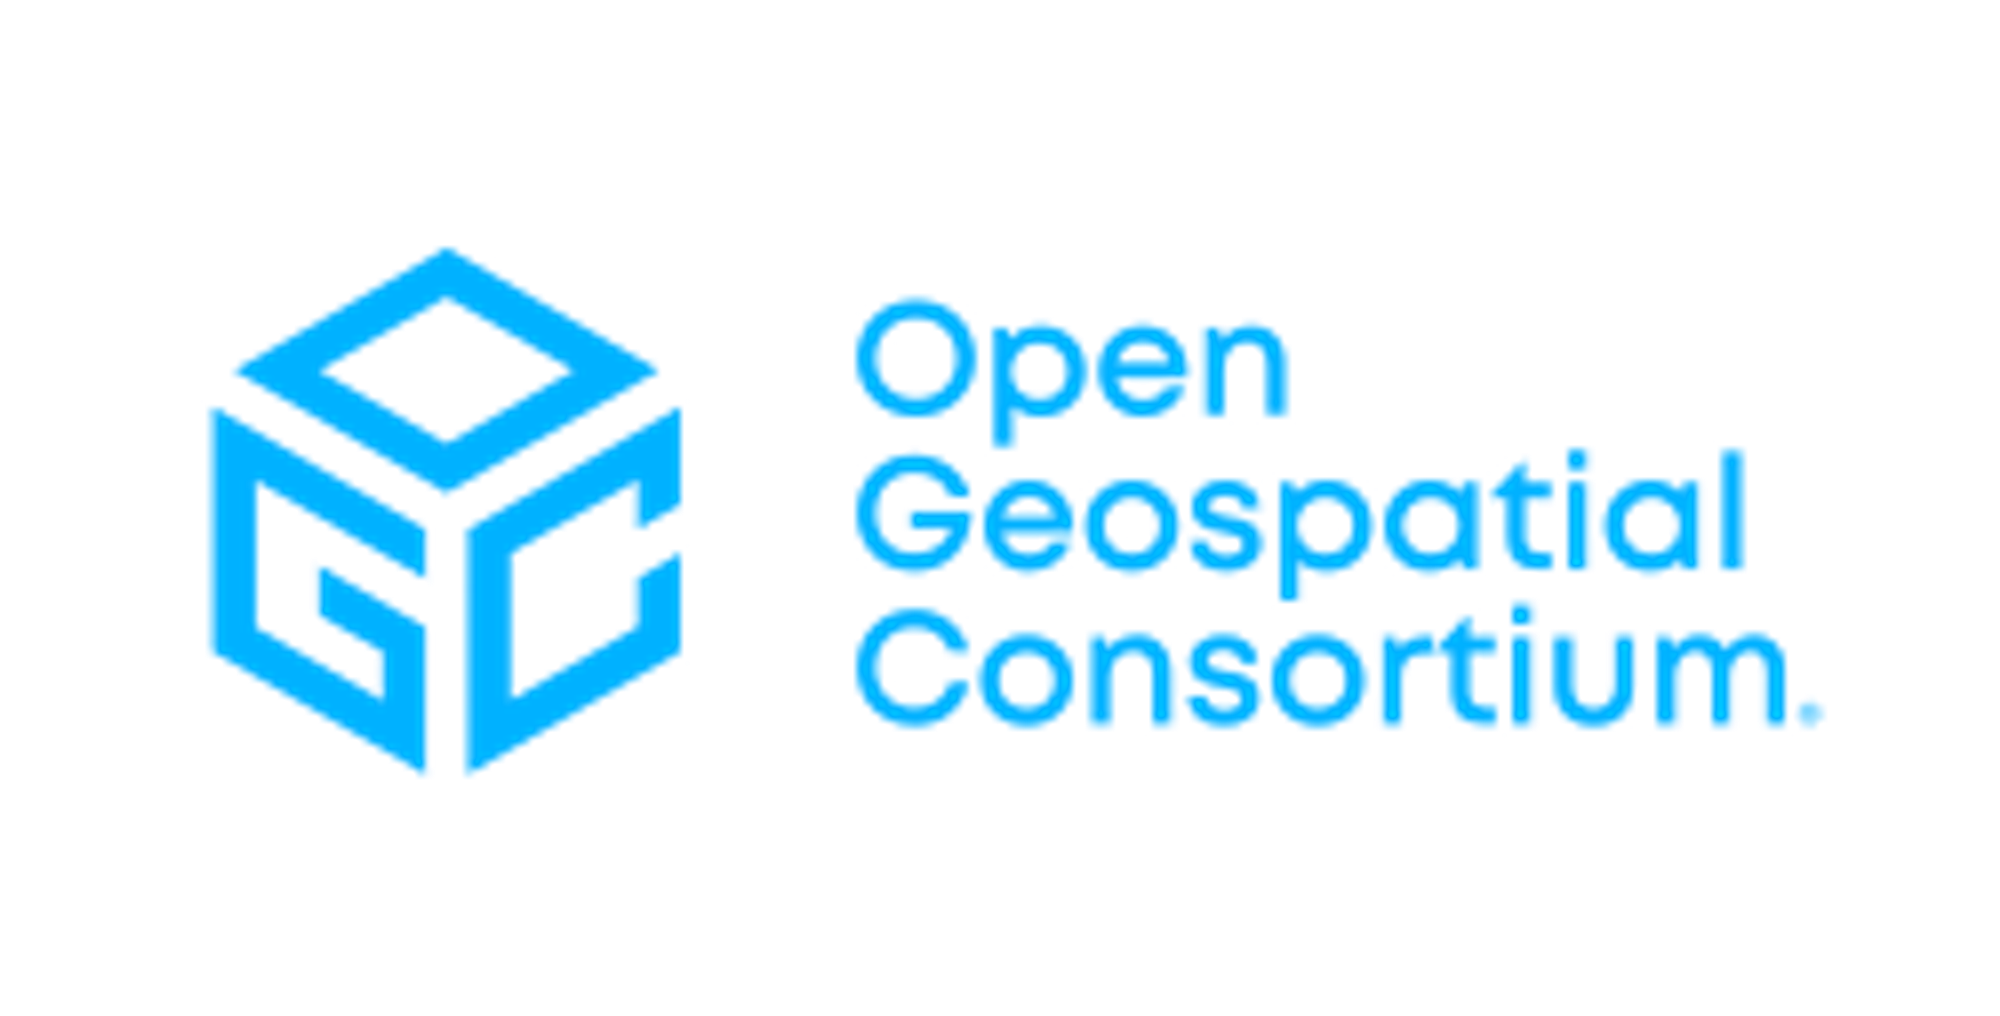 Open Geospatial Consortium - Wikipedia